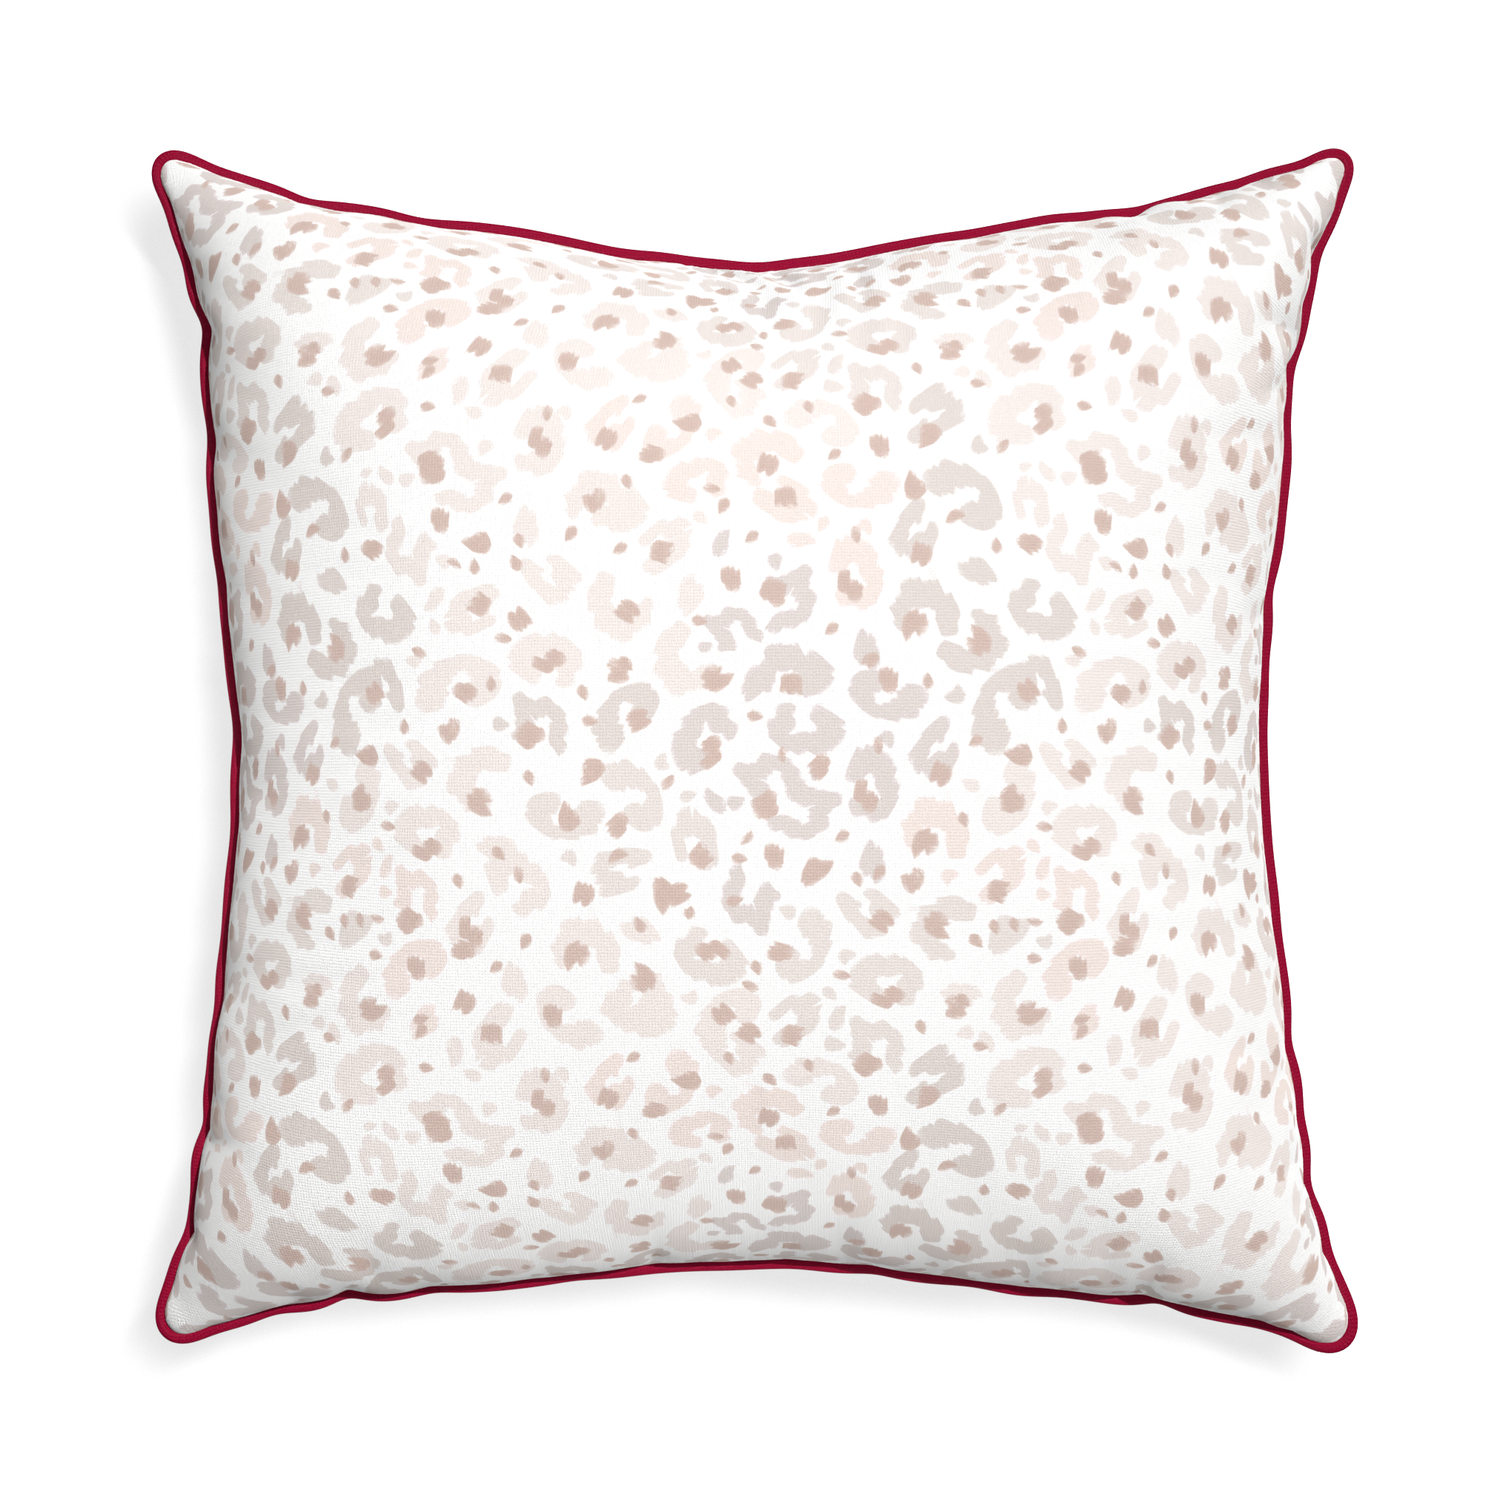 Euro-sham rosie custom pillow with raspberry piping on white background